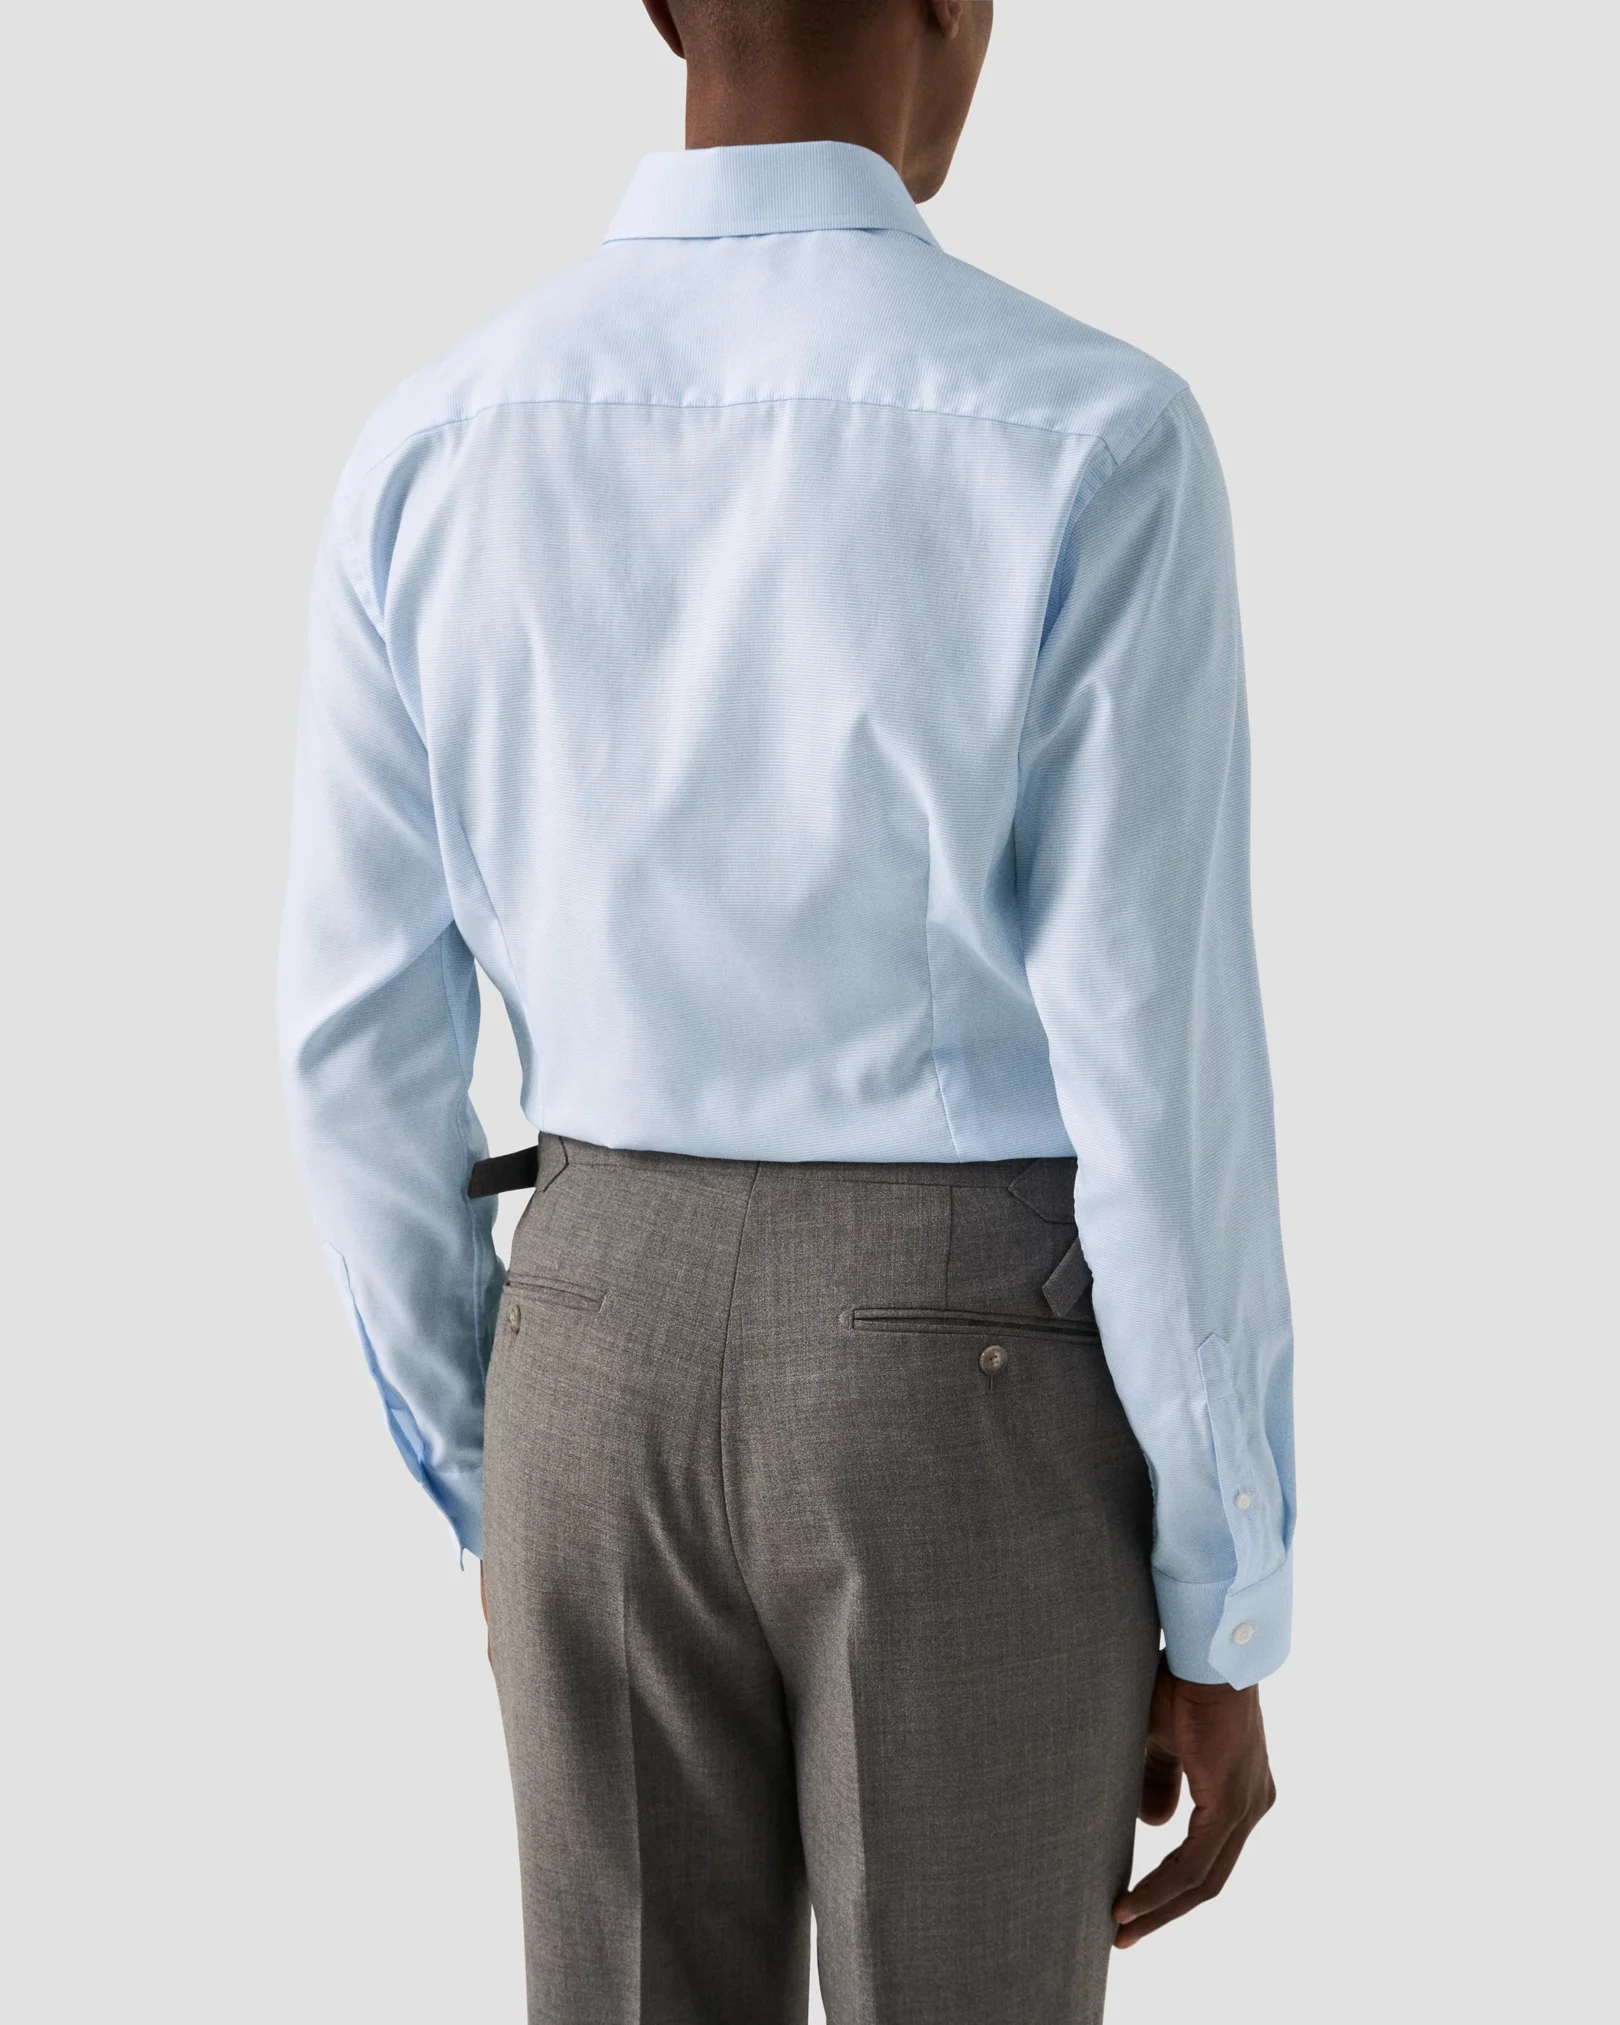 Eton - Light Blue Twill Shirt